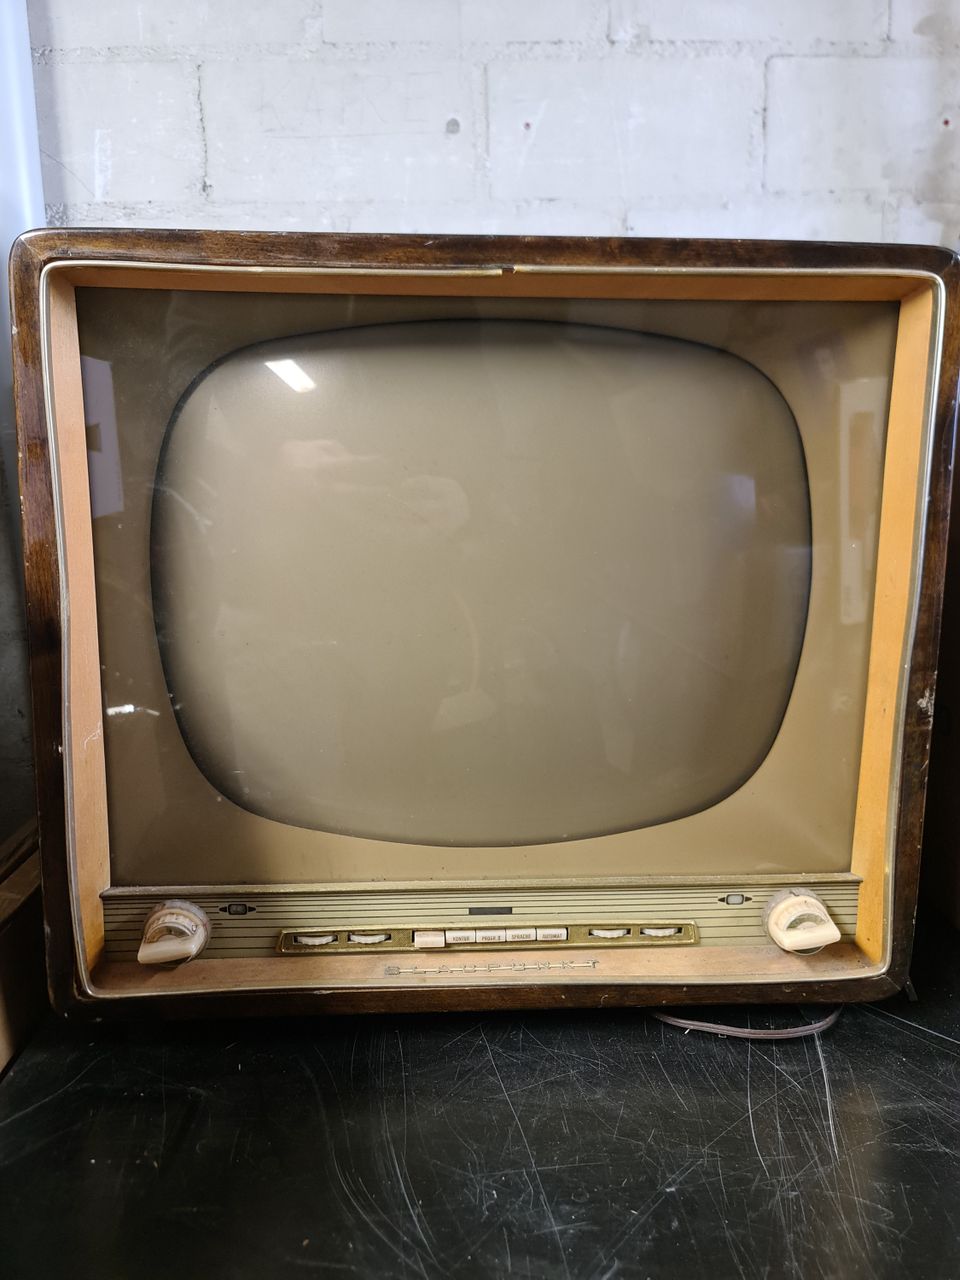 Blaubunkt kuvaputki televisio 1960luku